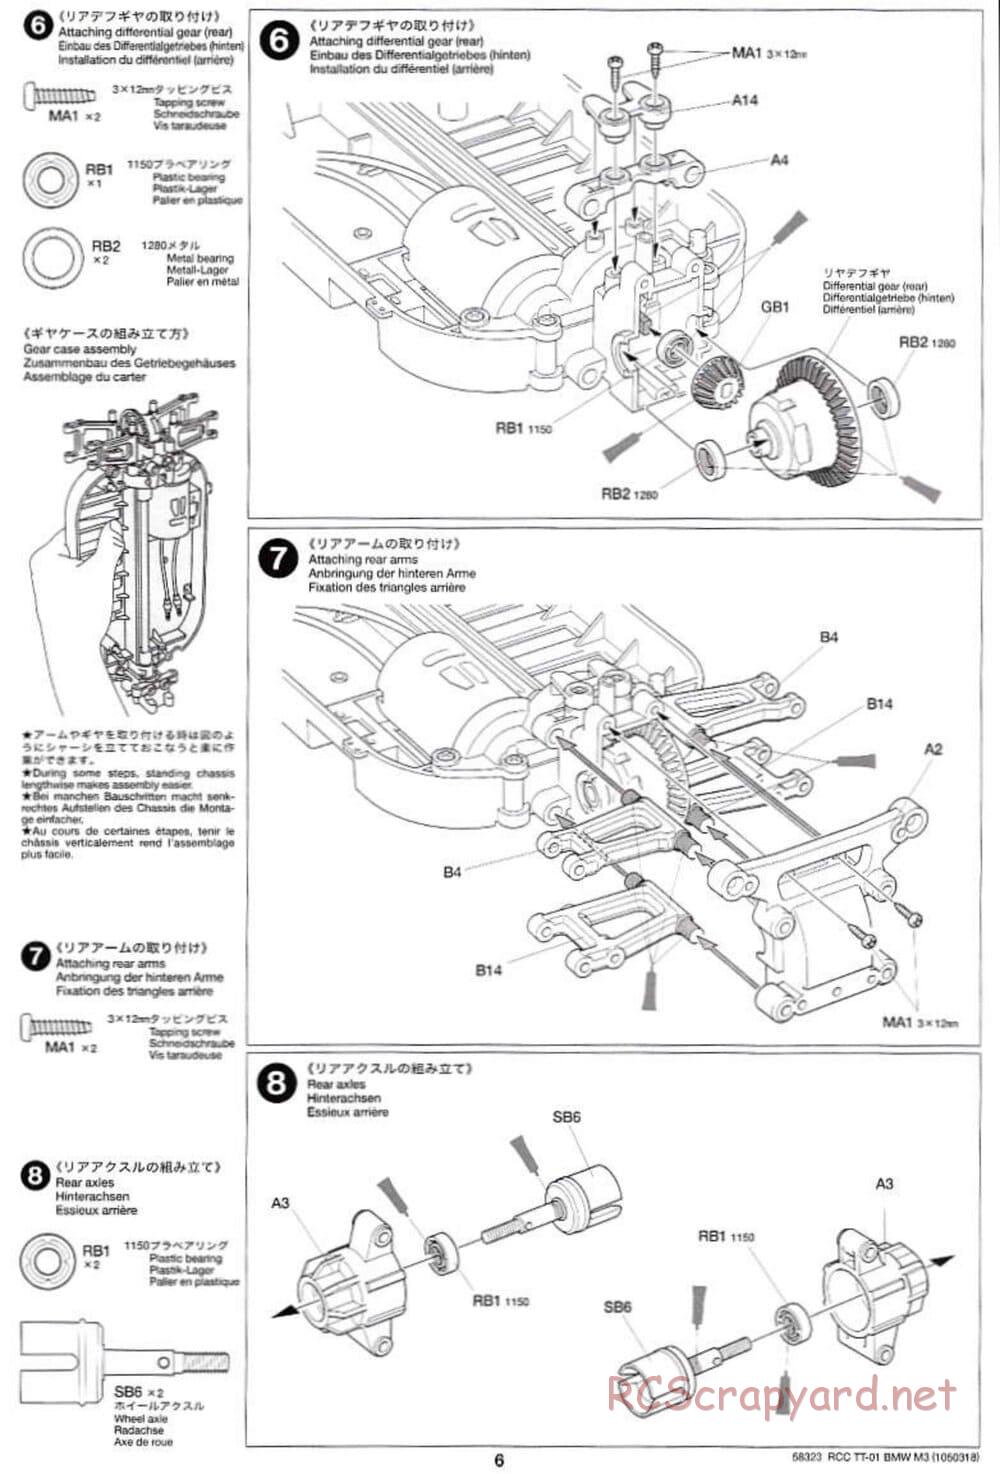 Tamiya - Schnitzer BMW M3 Sport Evo - TT-01 Chassis - Manual - Page 6